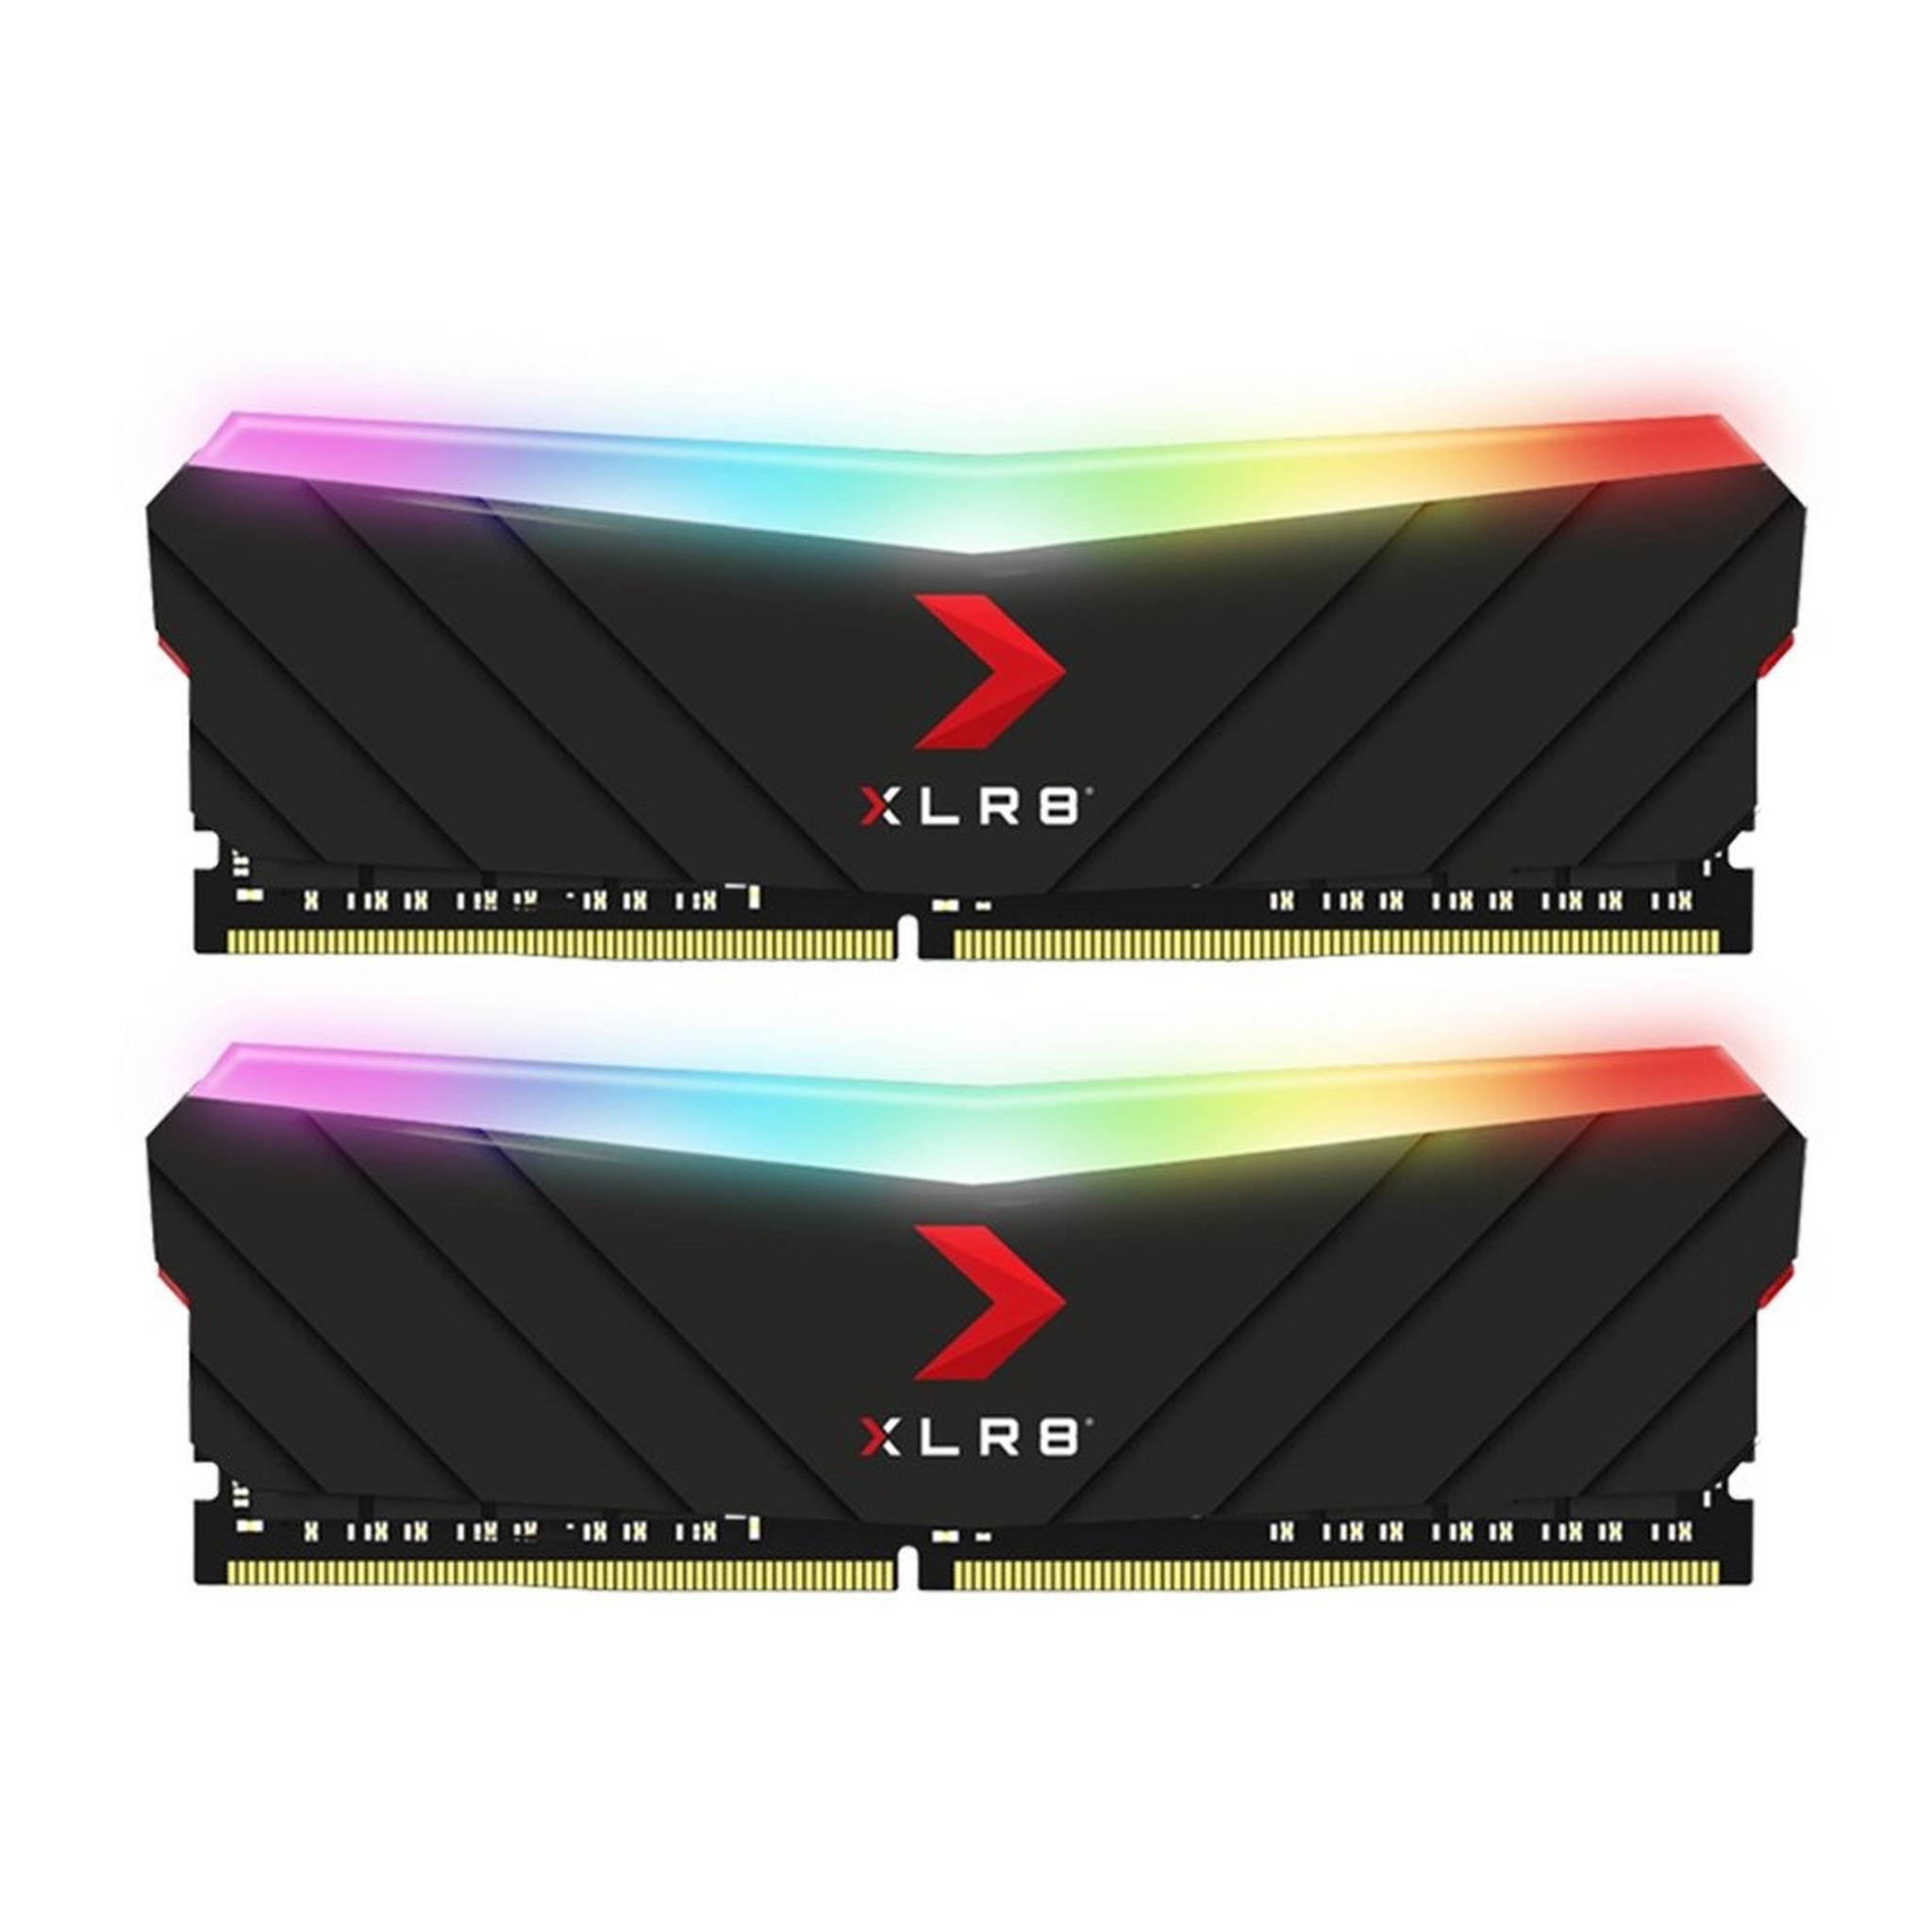 PNY XLR8 Epic X RGB-DDR4 3600mHz 2*16GB Gaming Desktop Memory - Black